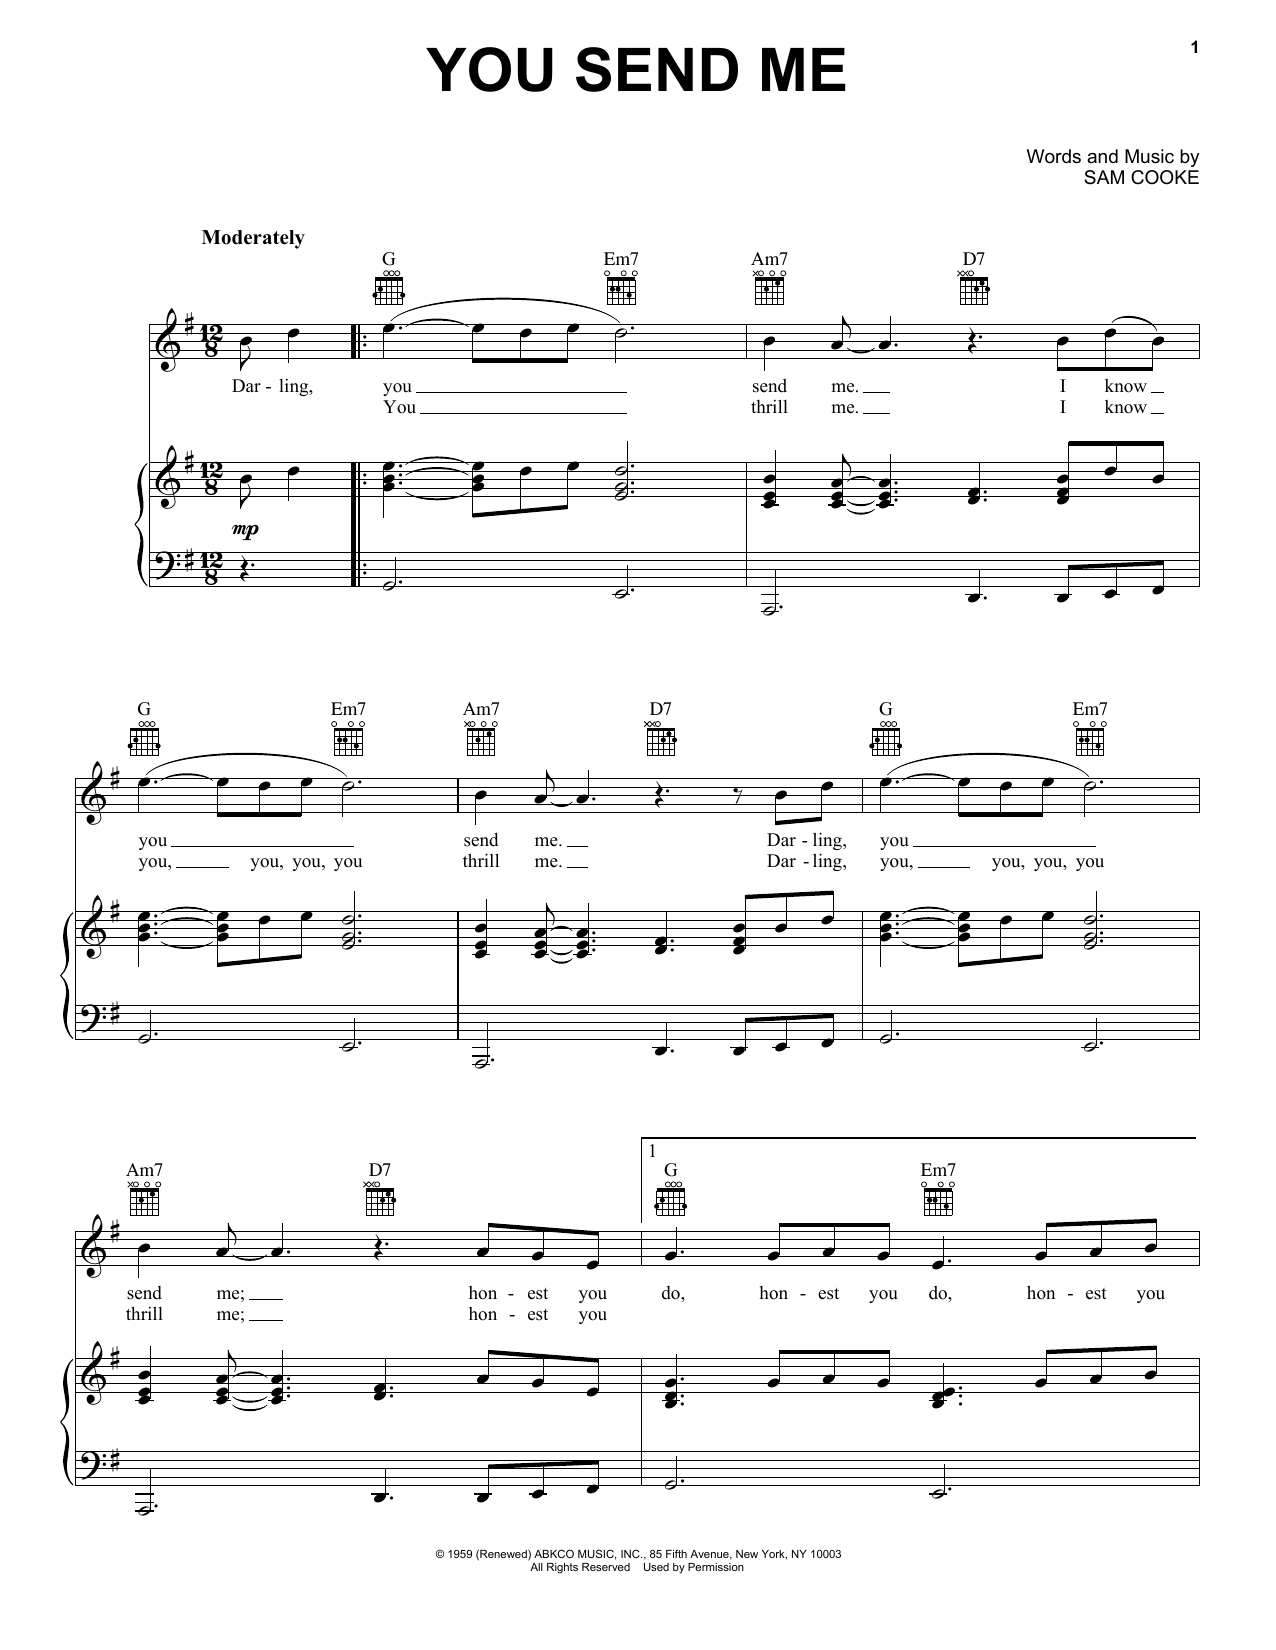 Sam Cooke You Send Me Sheet Music Notes & Chords for Melody Line, Lyrics & Chords - Download or Print PDF